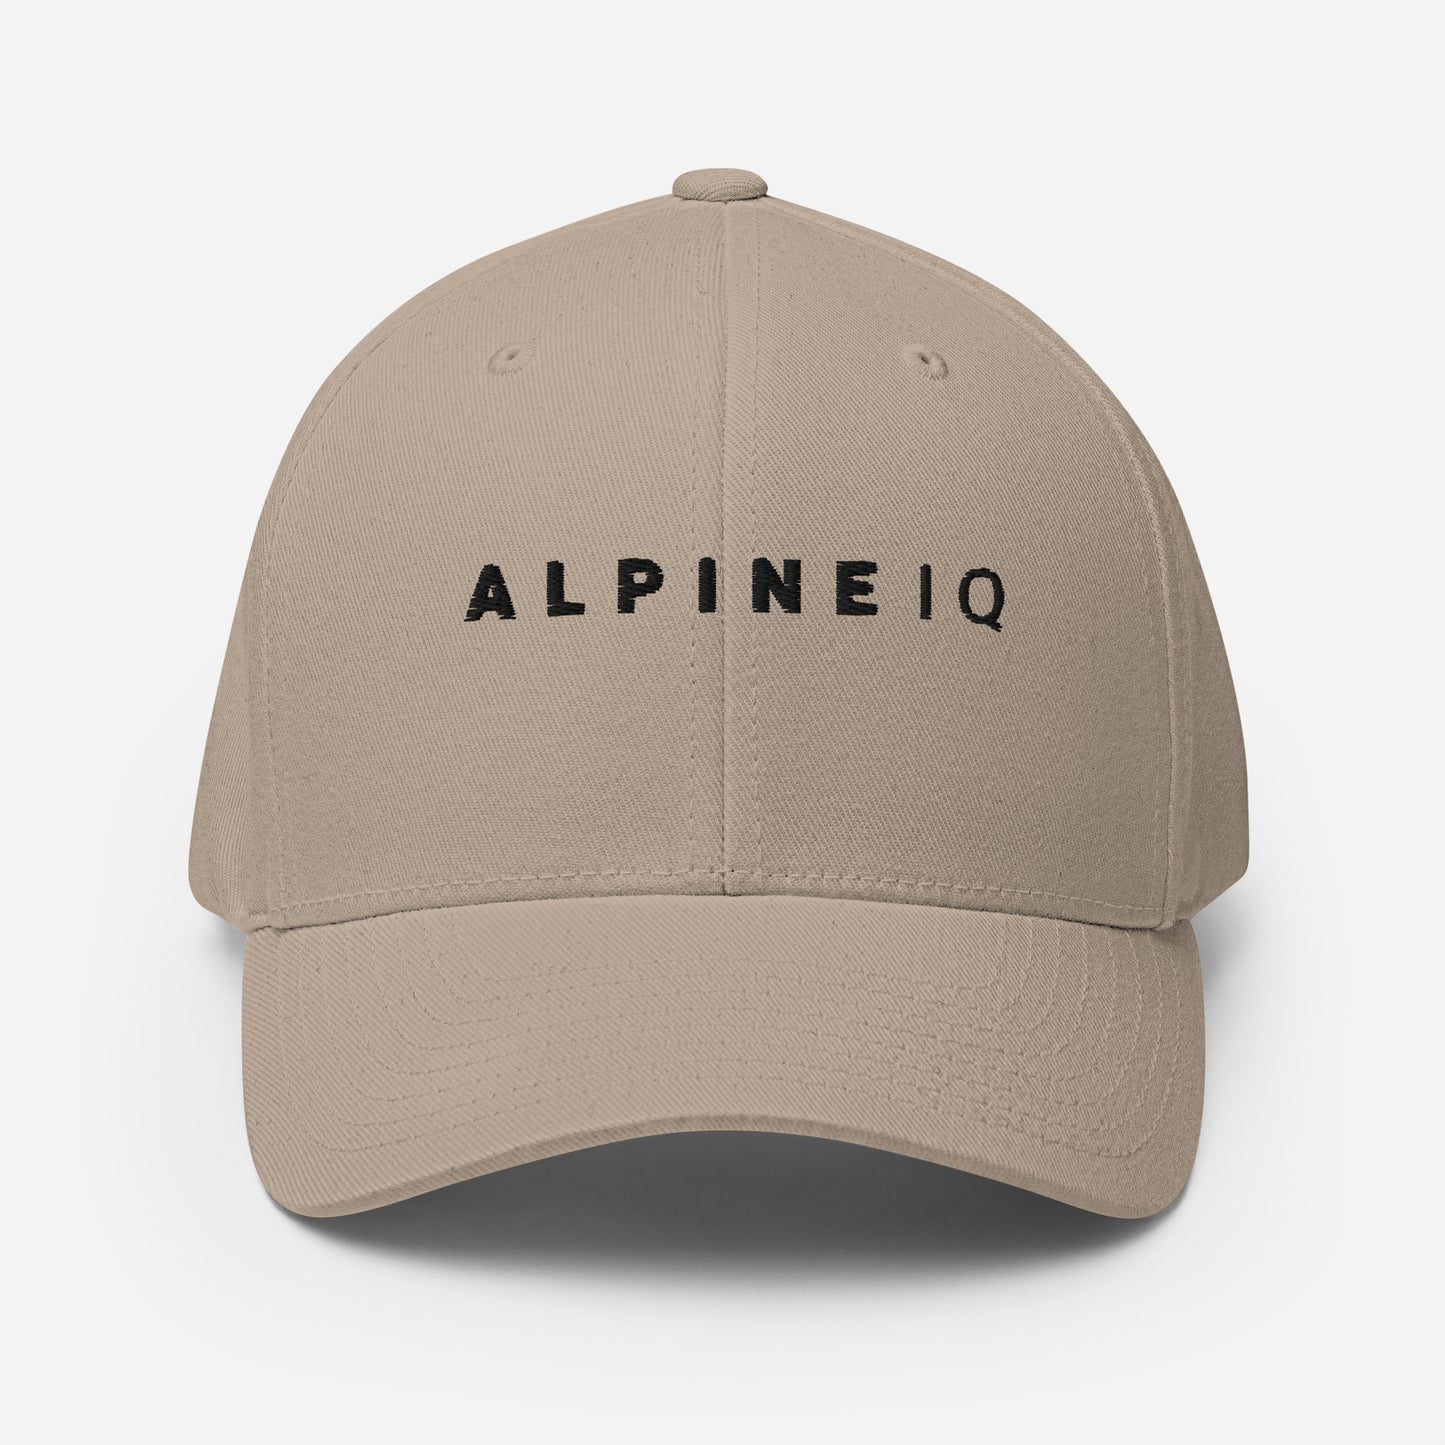 Alpine IQ Light Baseball Caps